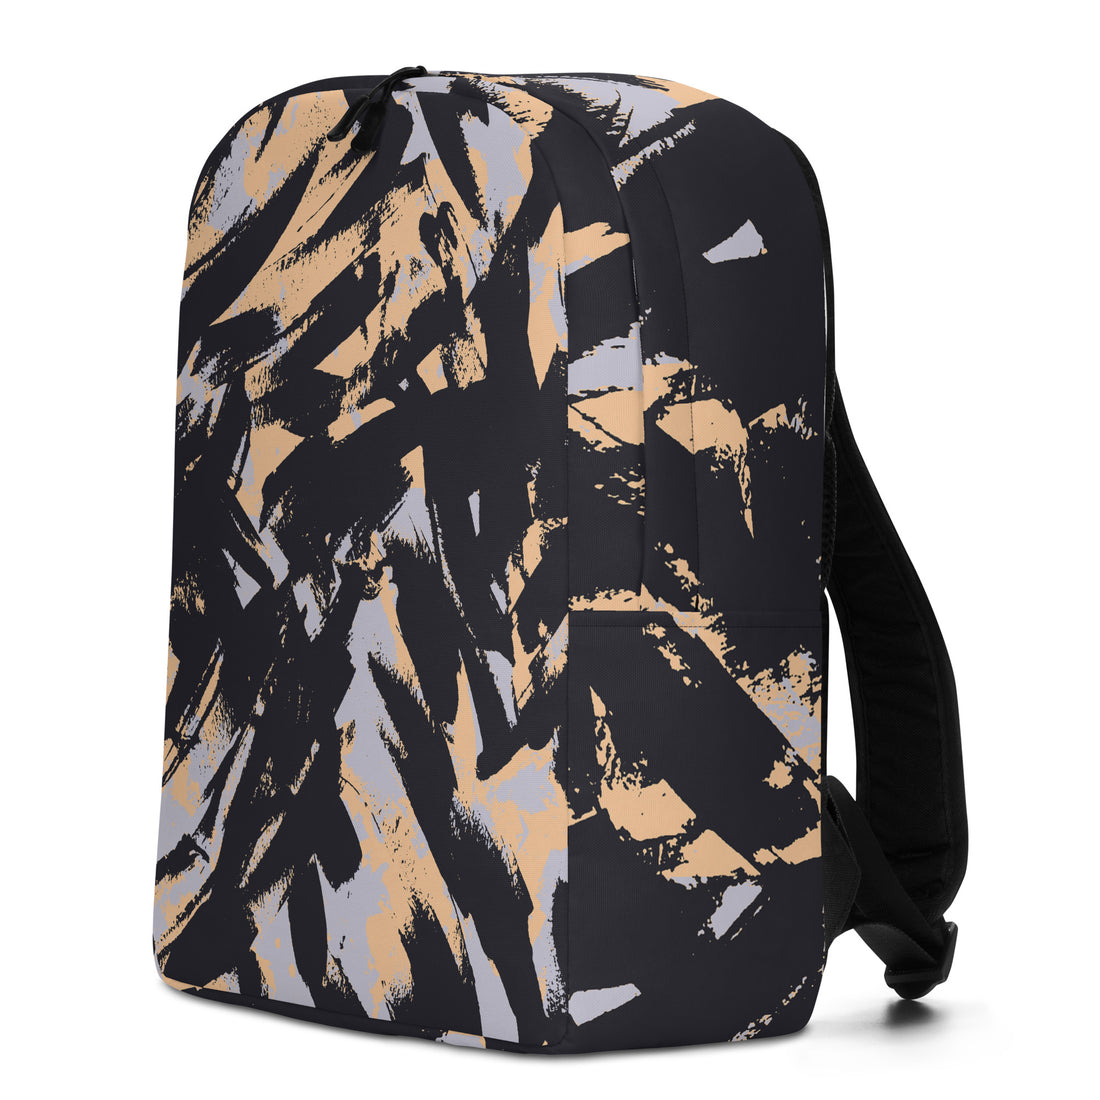 Black Paint Backpack